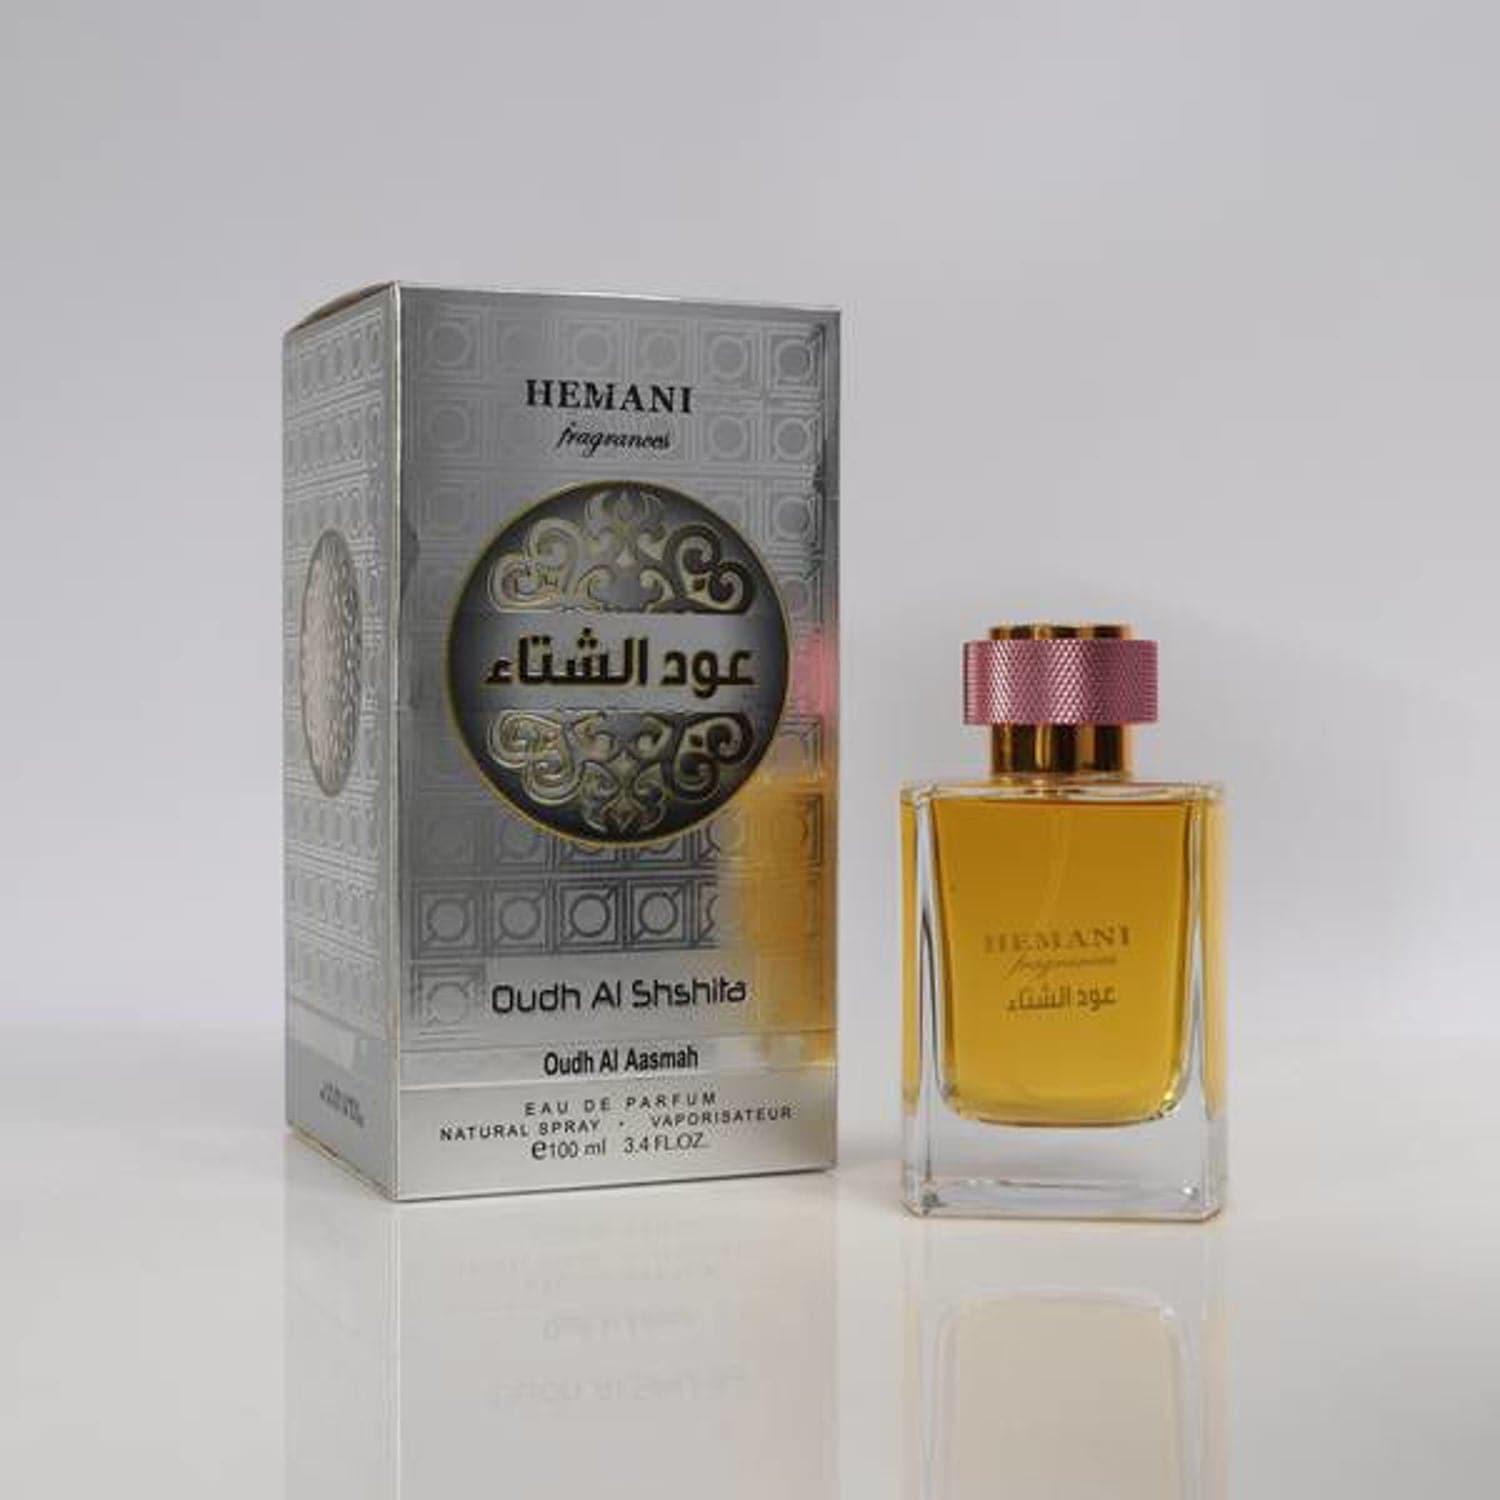 Hemani Oudh Al Shshita Perfume 100Ml - Premium  from Hemani - Just Rs 700.00! Shop now at Cozmetica